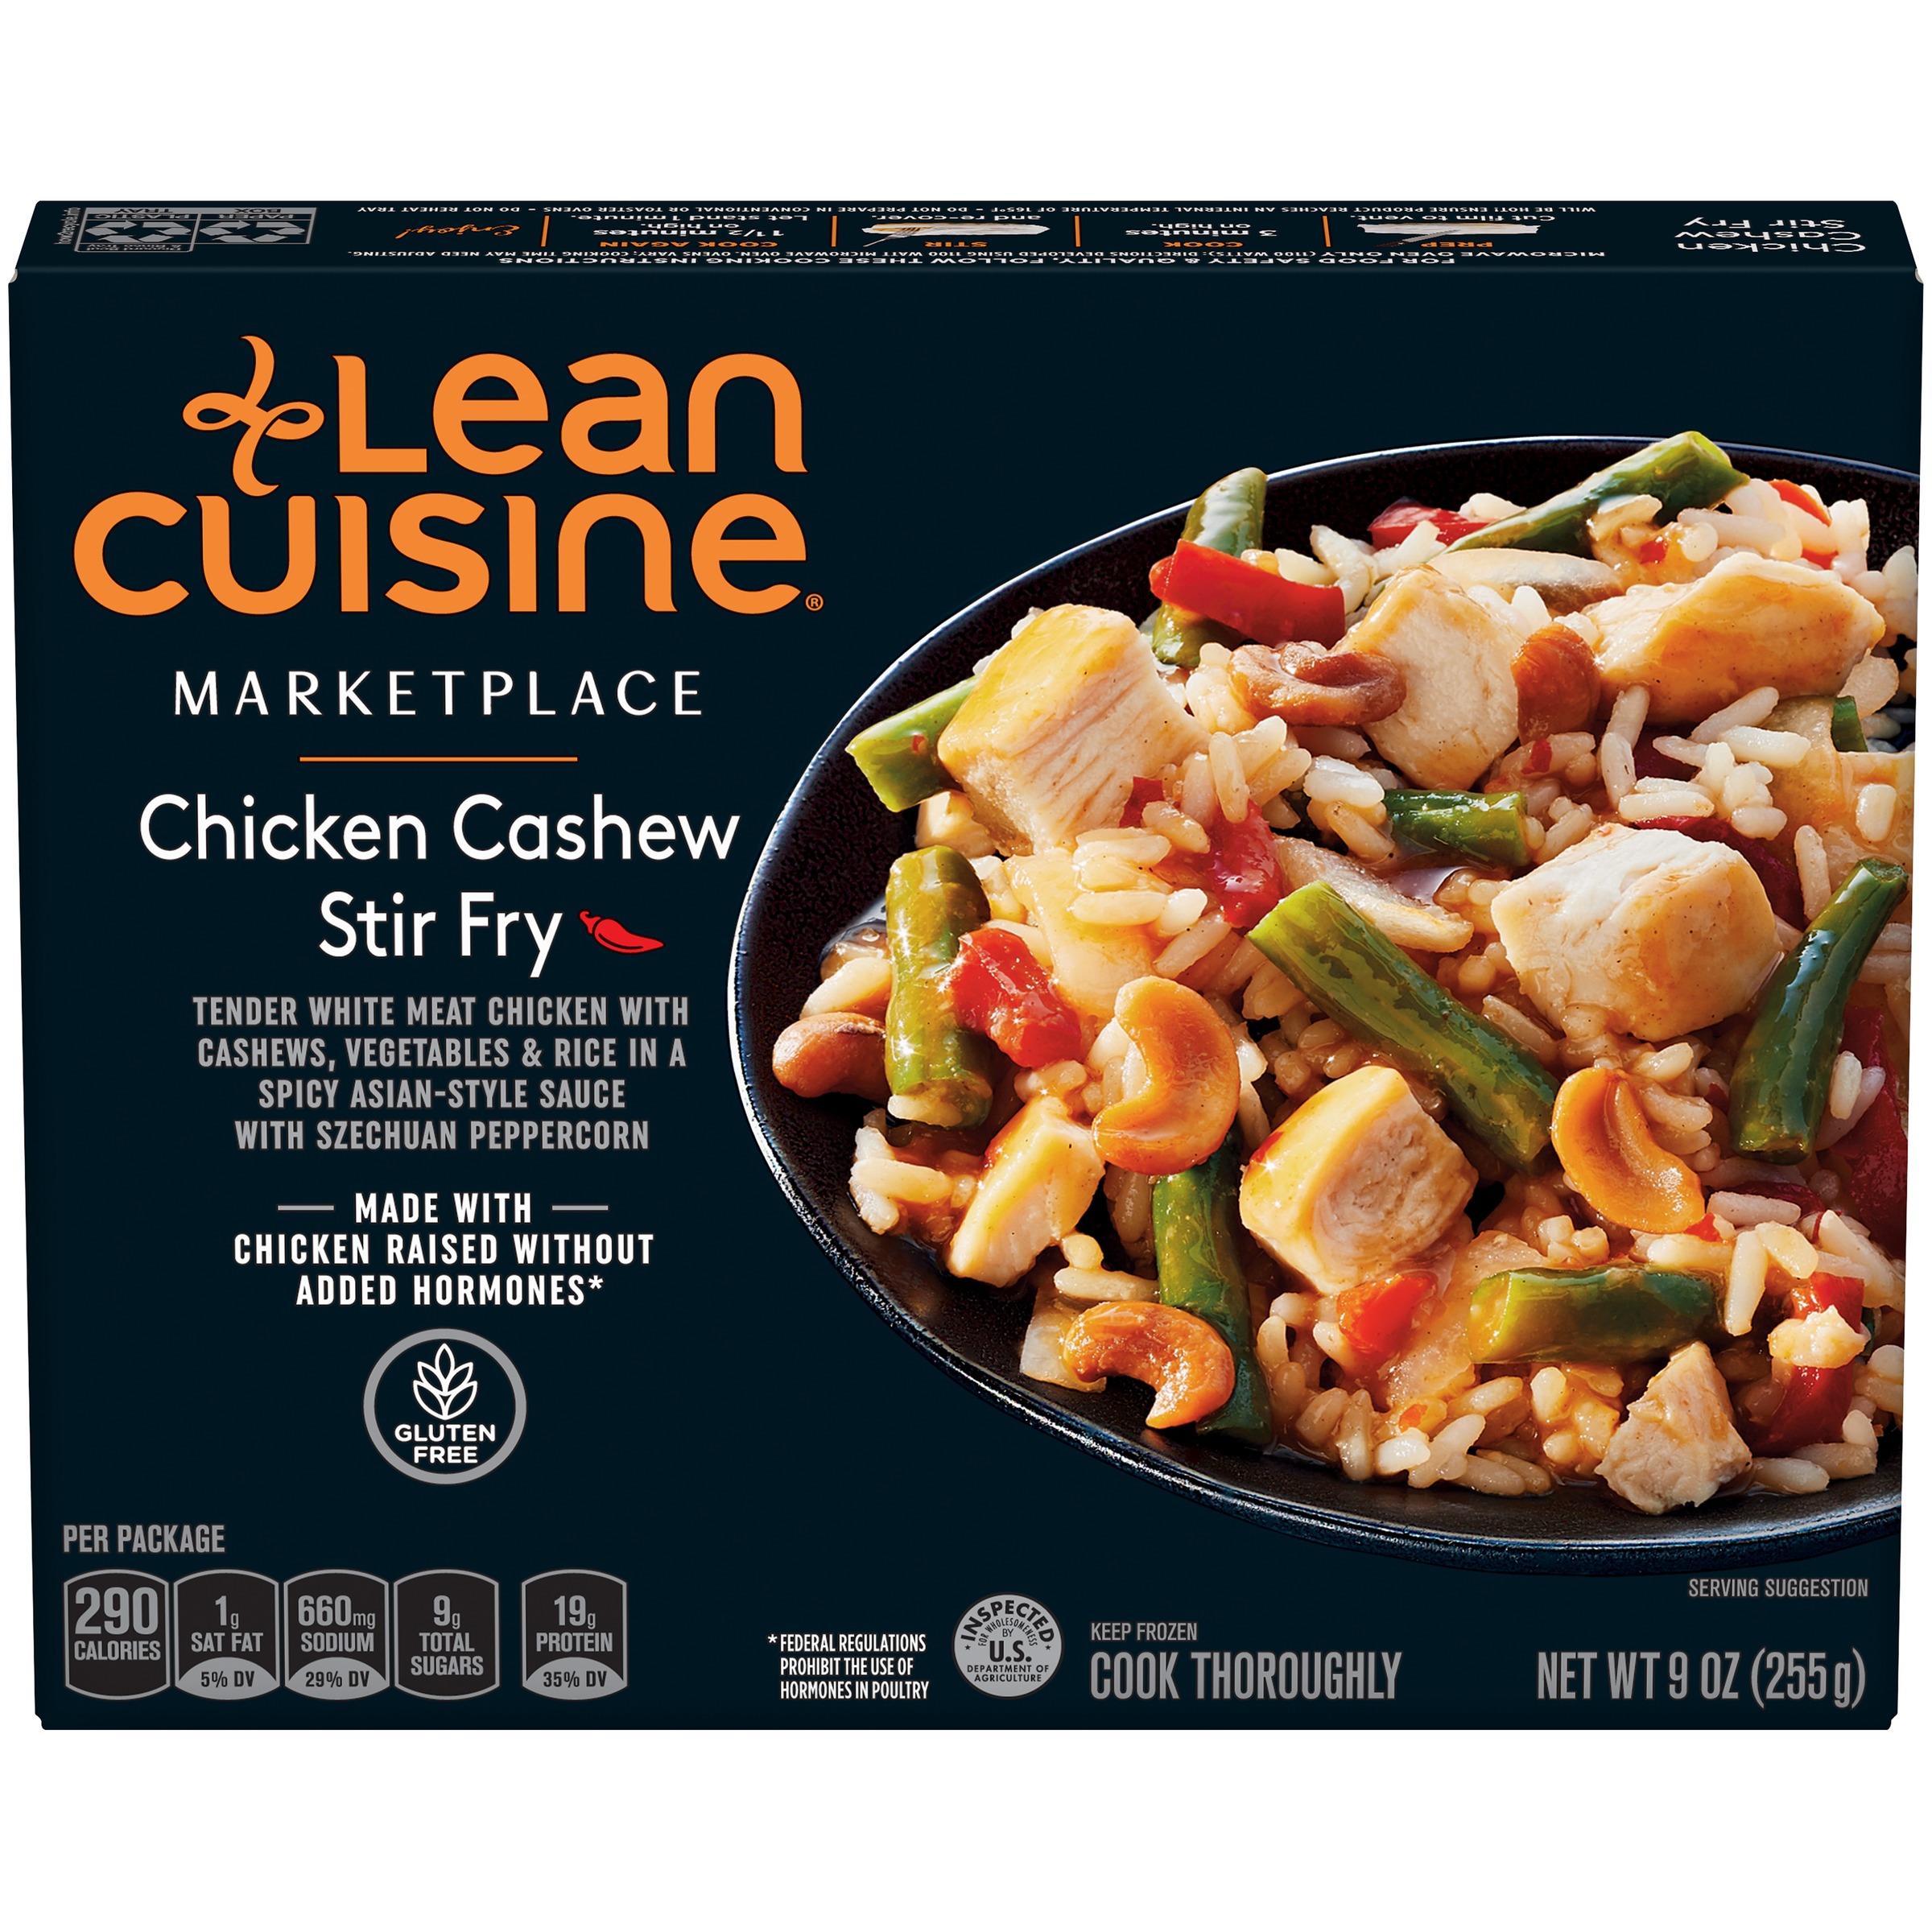 LEAN CUISINE MARKETPLACE Chicken Cashew Stir Fry 9 oz. Box - image 1 of 8